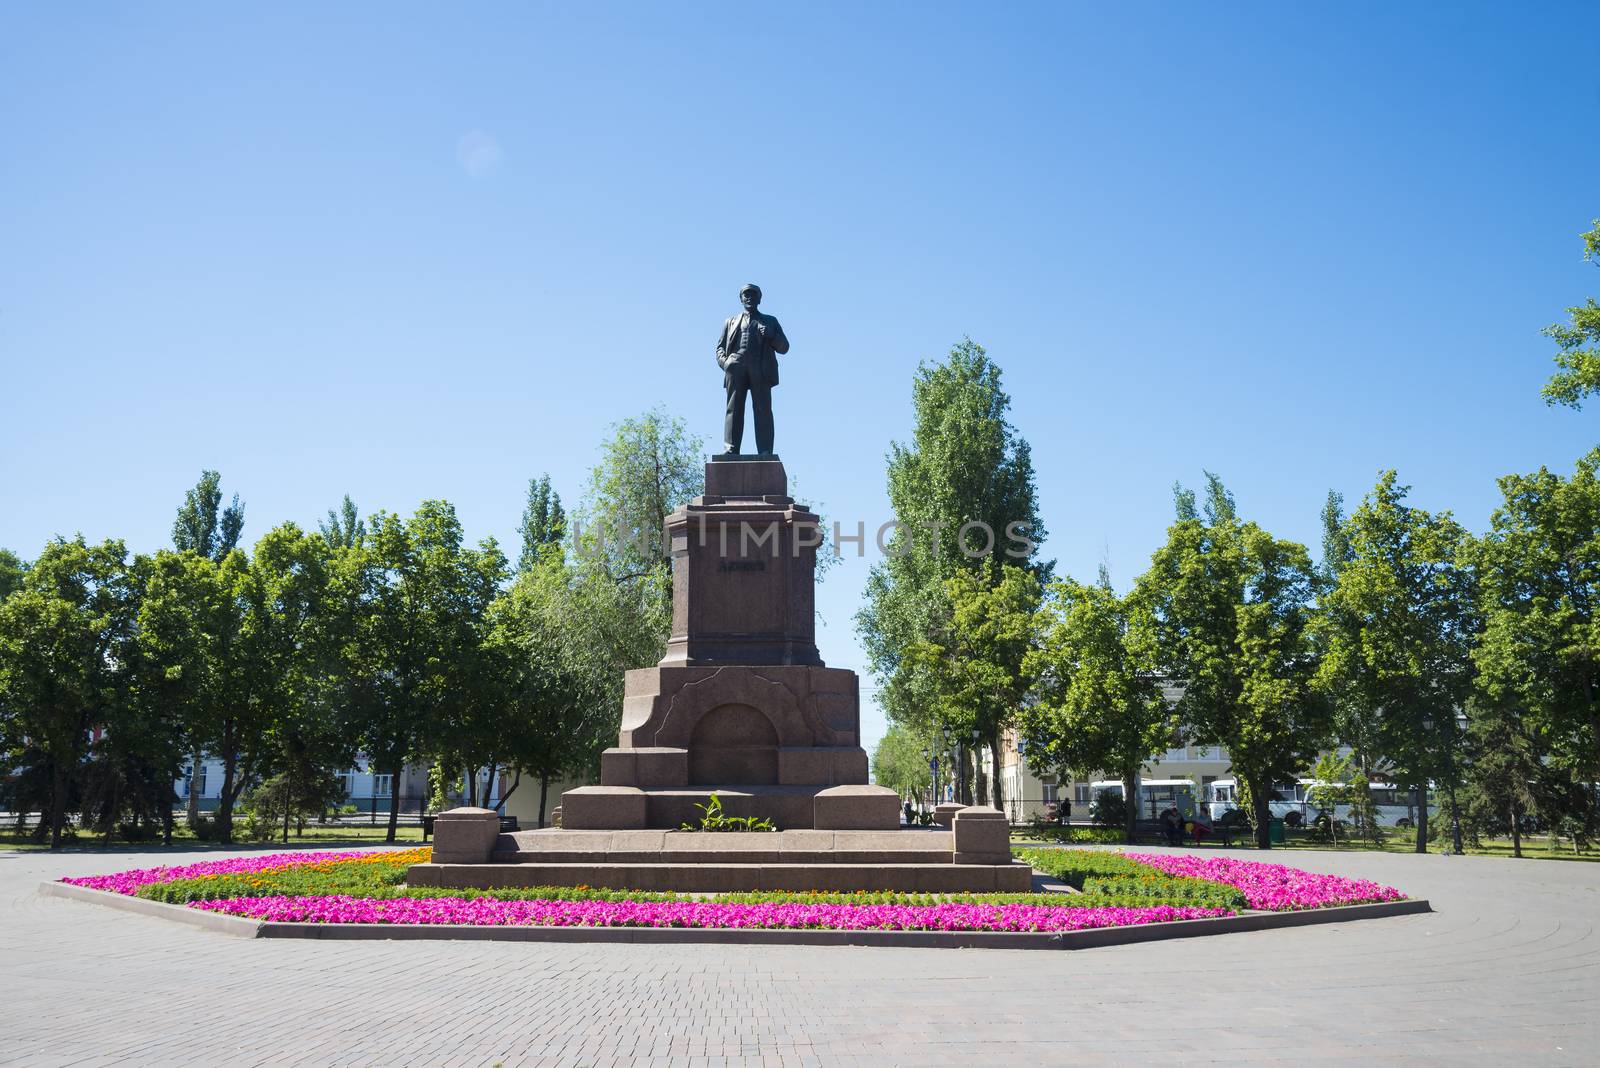 Granite monument to Vladimir Lenin on Revolution square in Samara, Russia. On a Sunny summer day. 17 June 2018